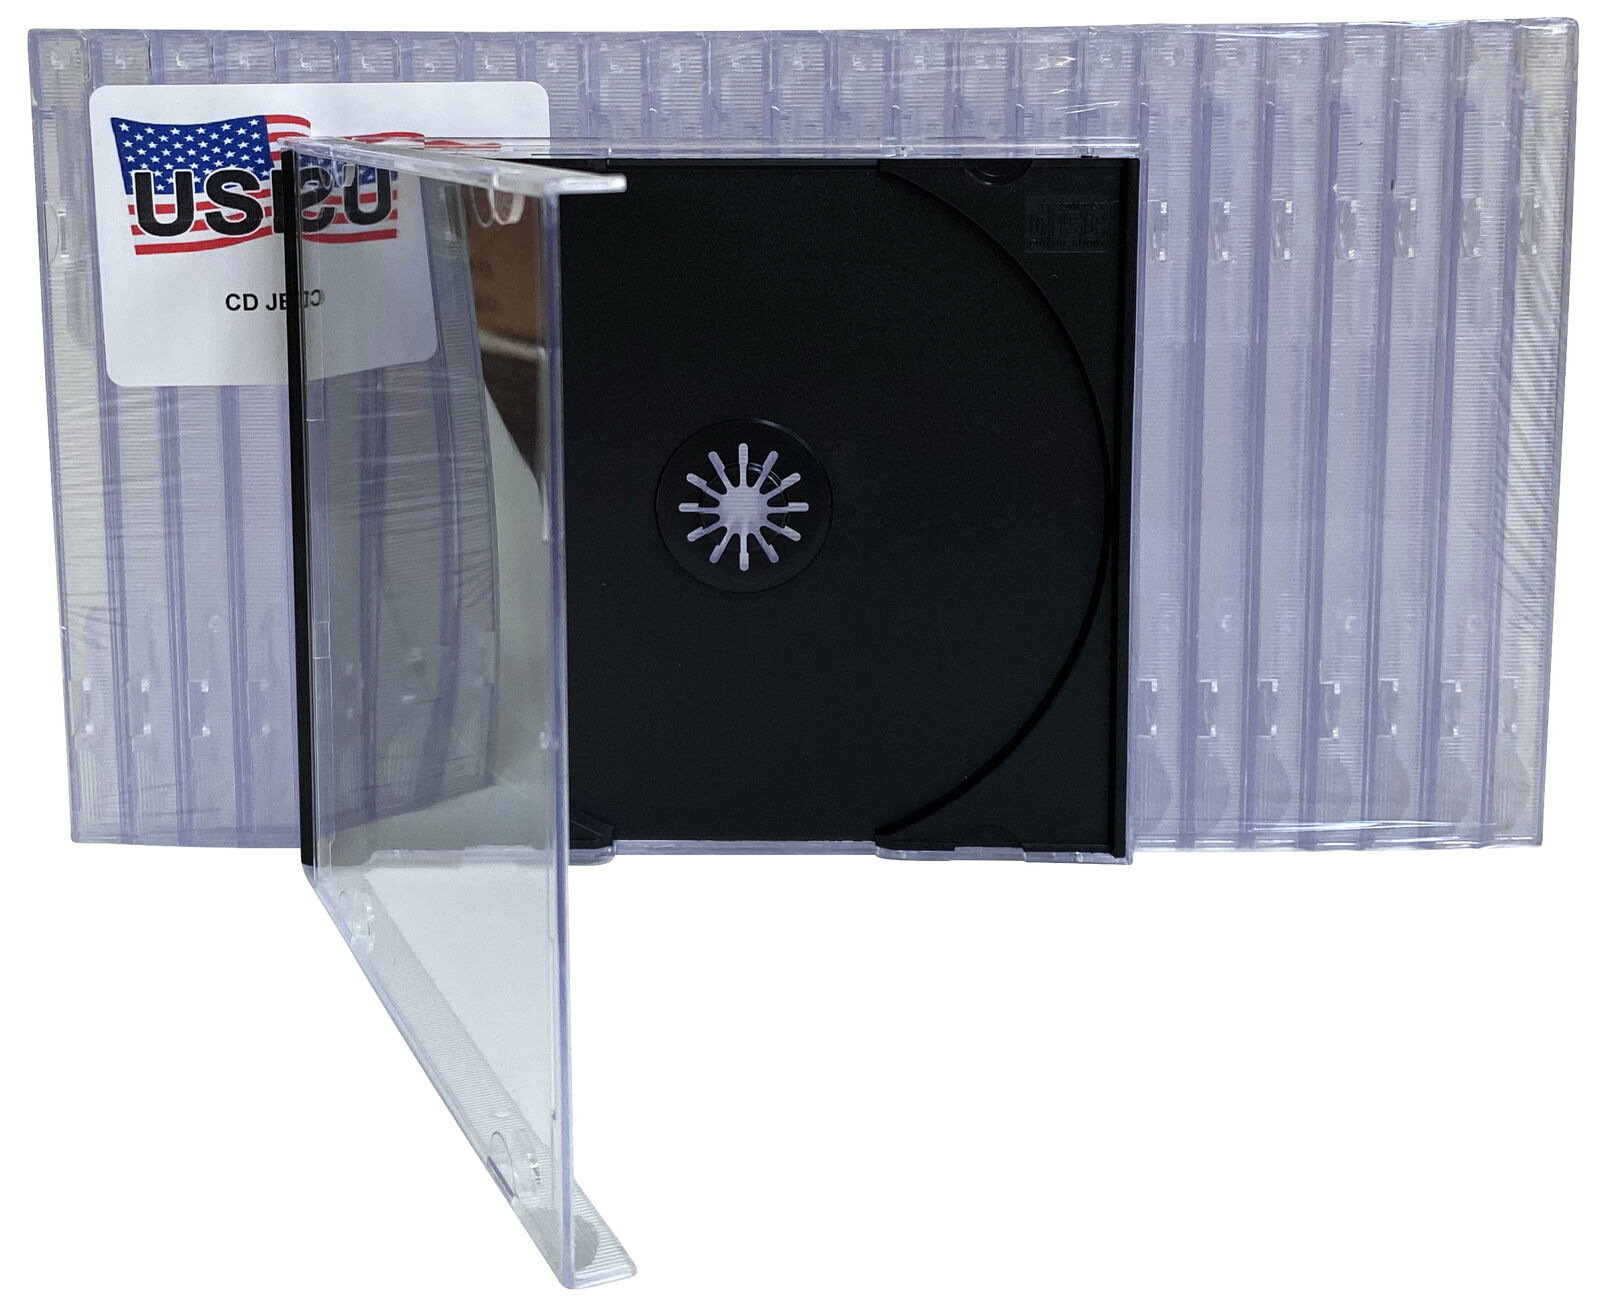 200 USDISC CD Jewel Cases Standard 10.4mm, Single 1 Disc (Black) Lot